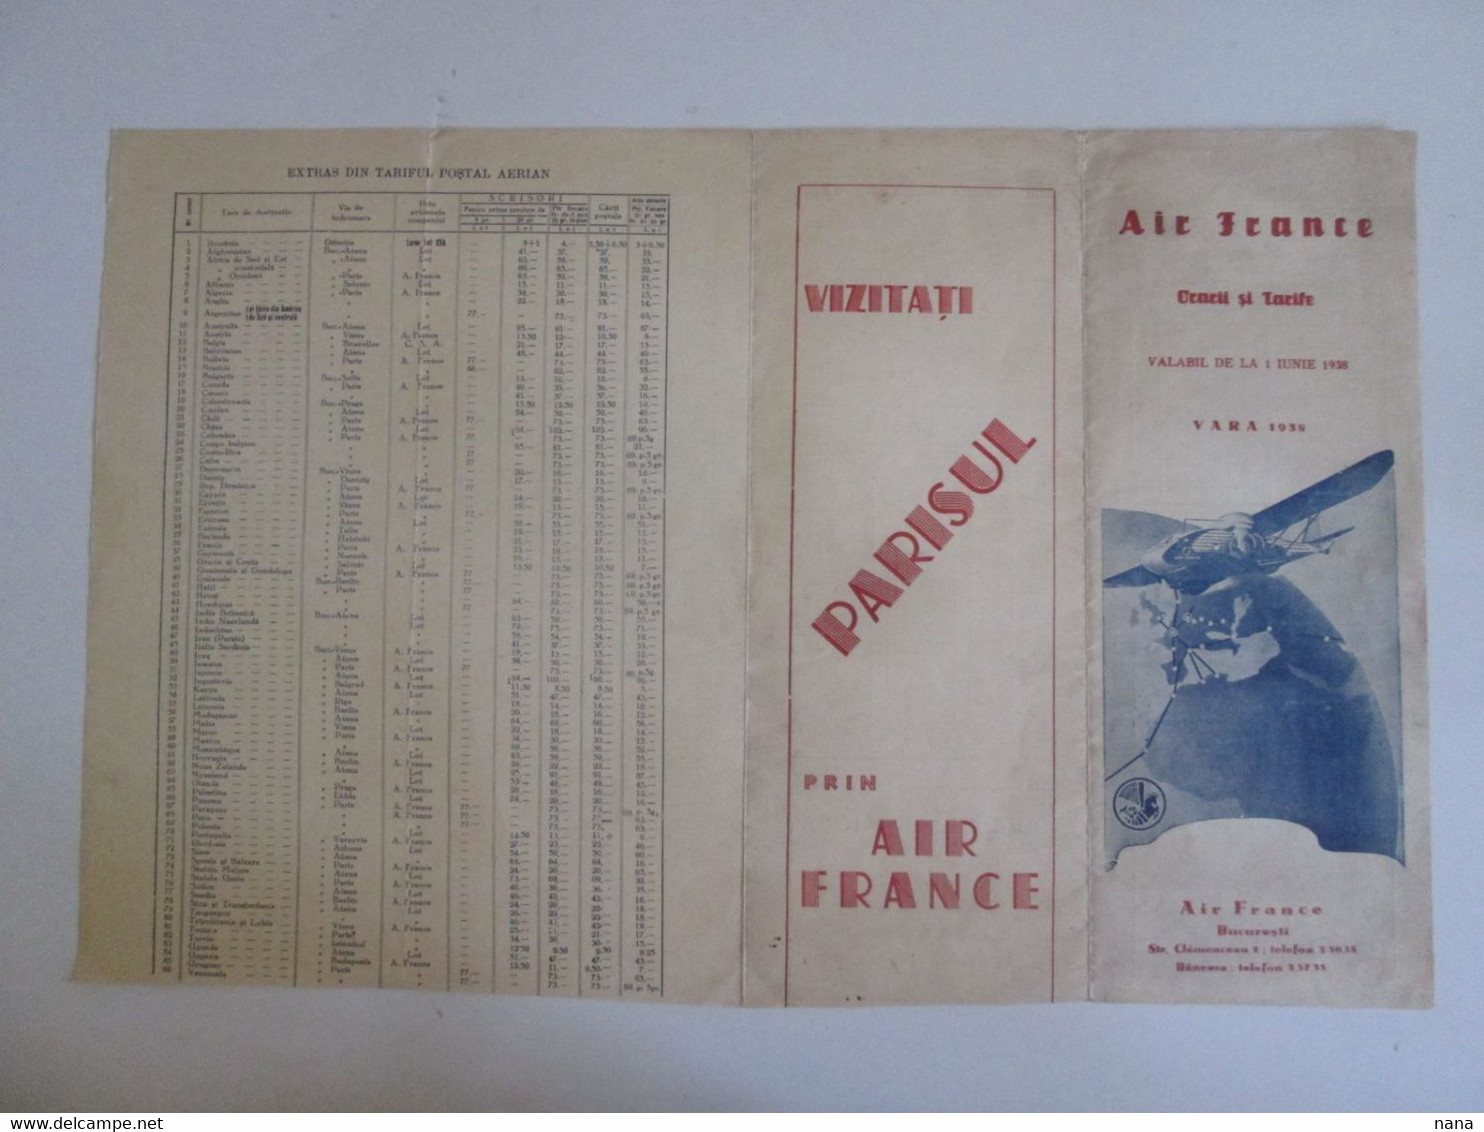 Rare! Air France Horaires Et Tarifs Des Vols Ete 1938 En Roumain/Air France Summer 1938 Timetable & Prices In Romanian - Horarios